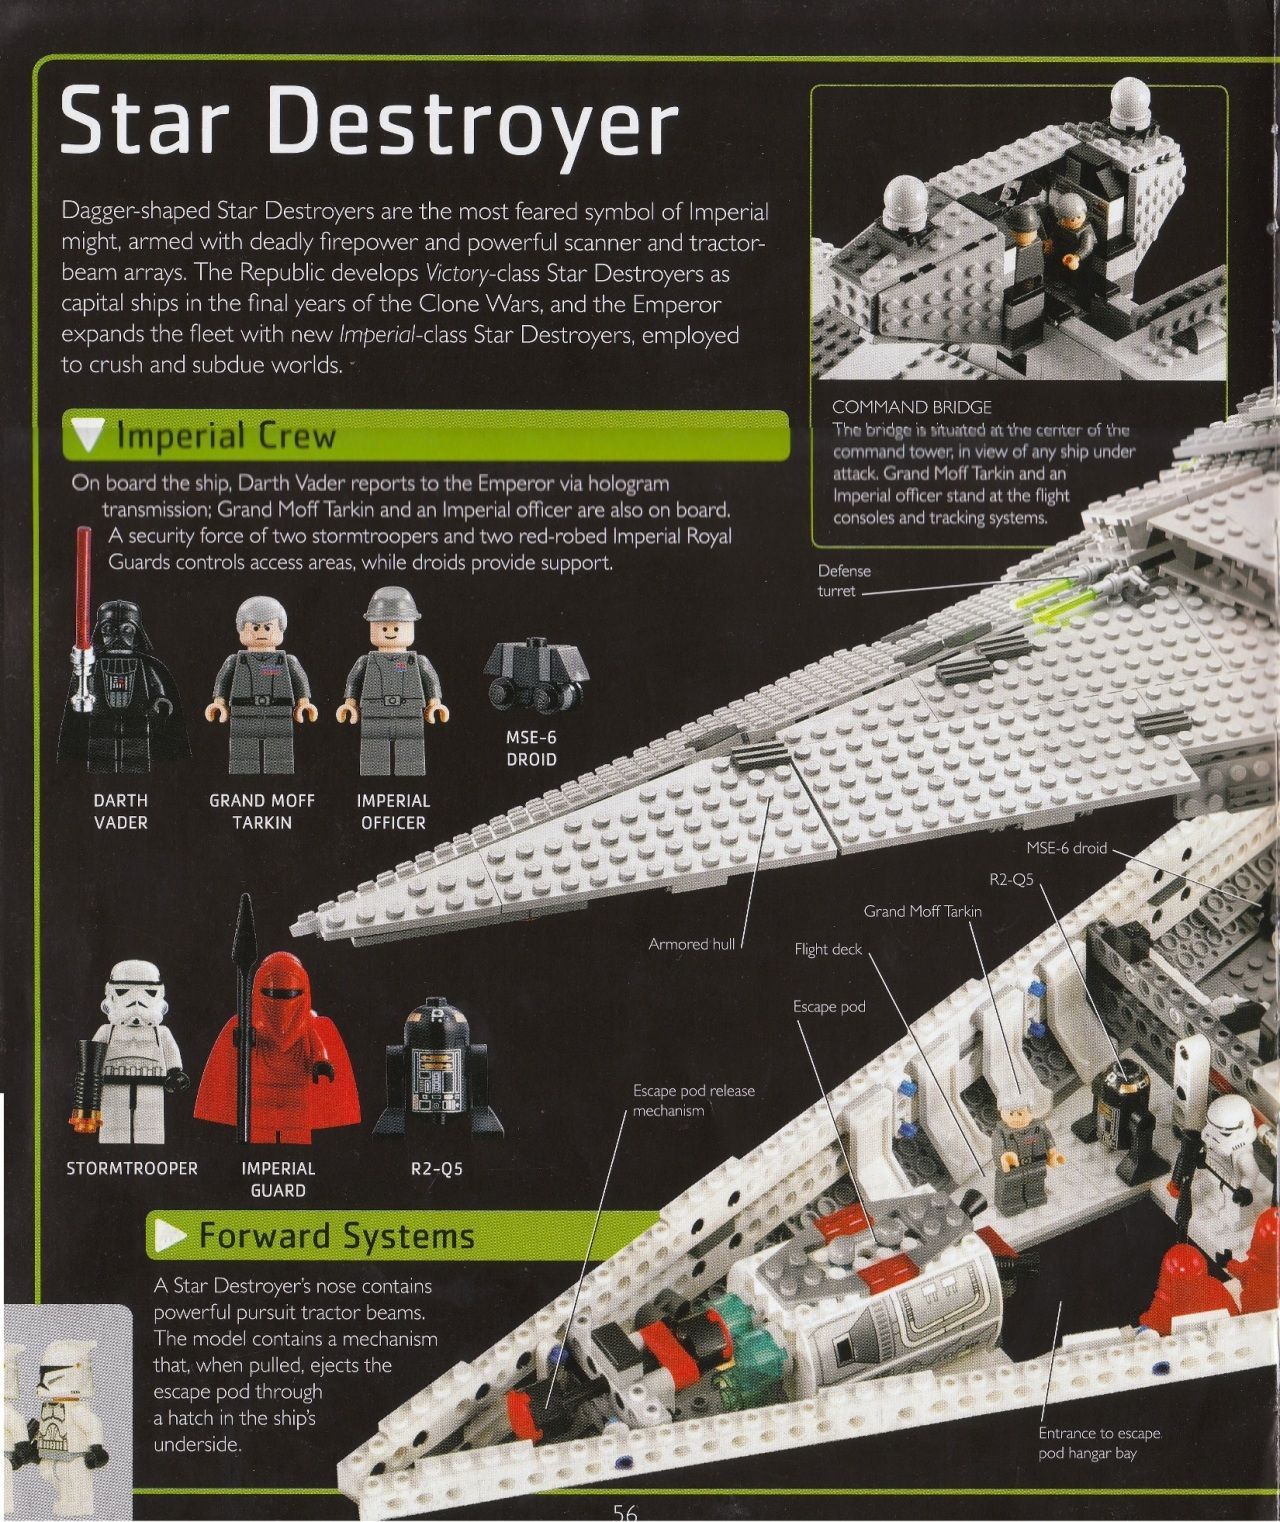 Lego Star Wars The Visual Dictionary 2009 Lego Star Wars The Visual Dictionary 2009 57